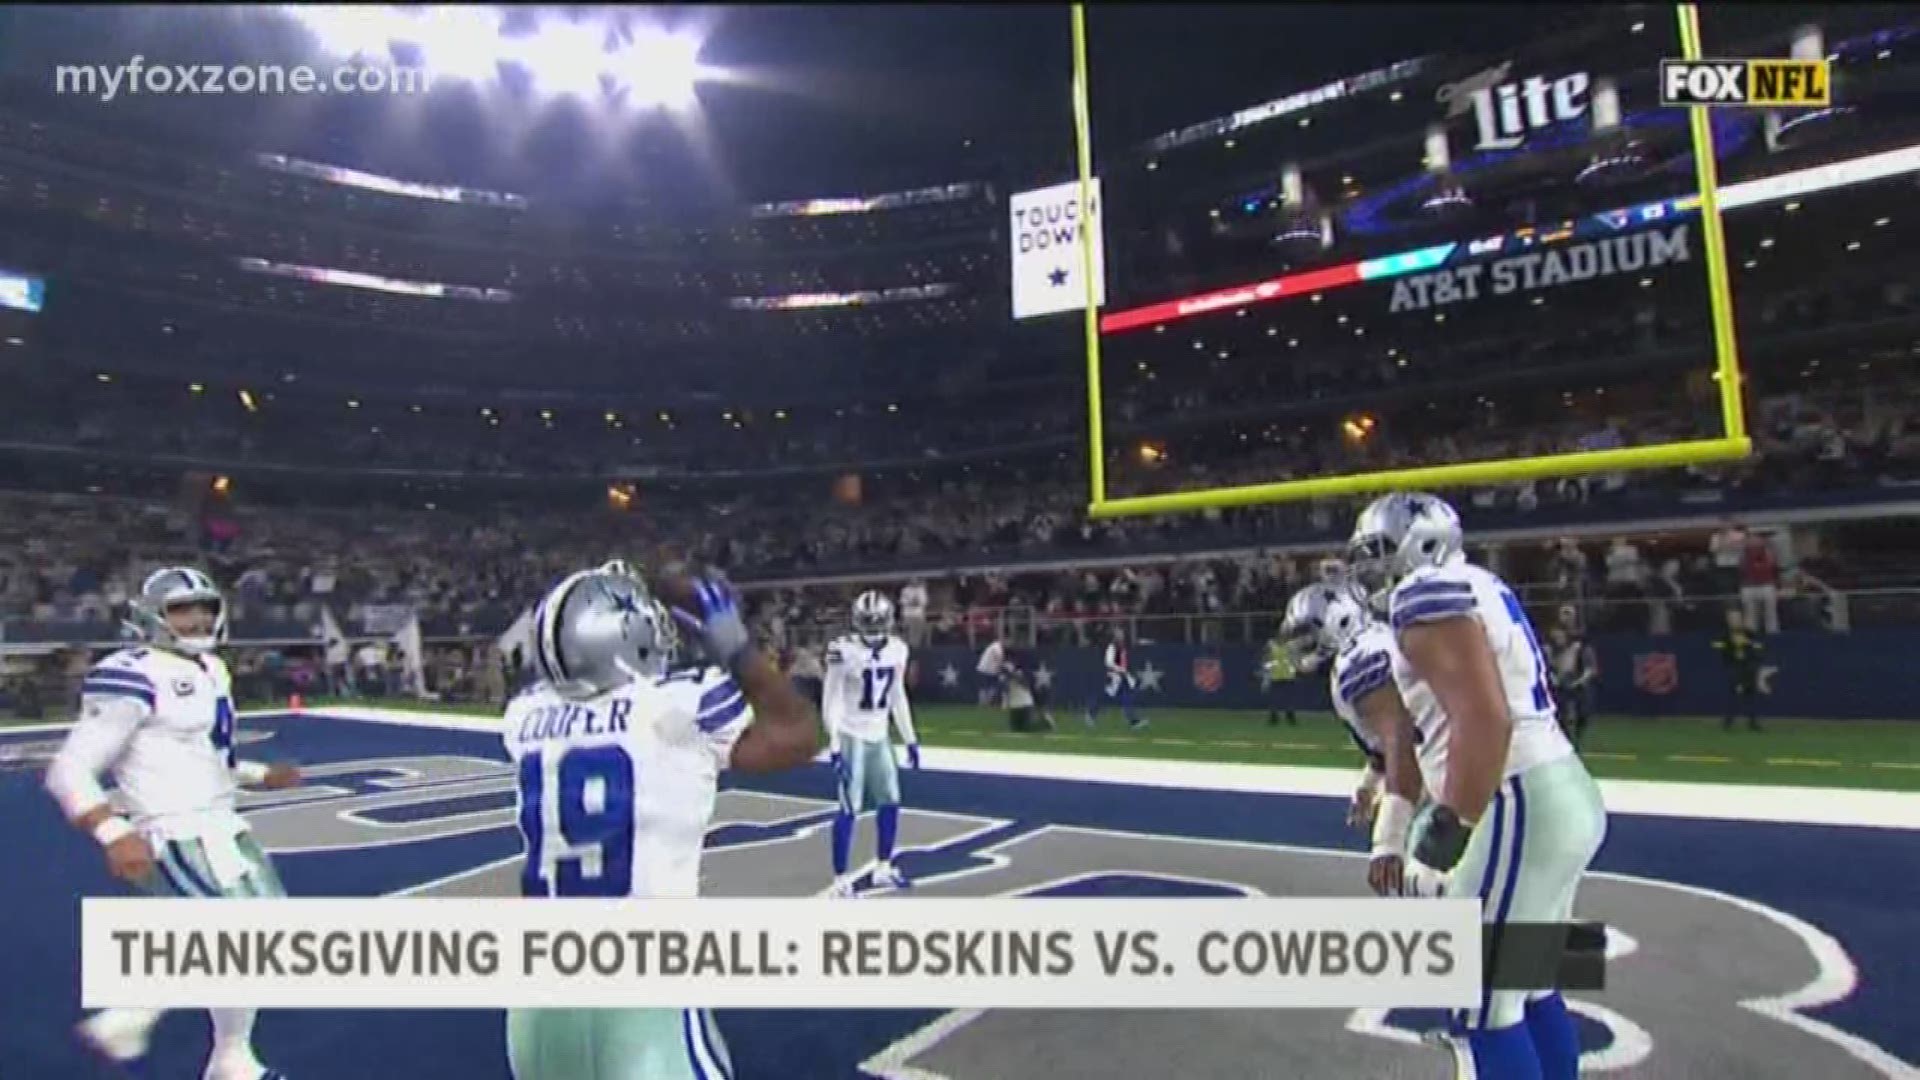 On Thanksgiving, the Dallas Cowboys beat the Washington Redskins 31-23.